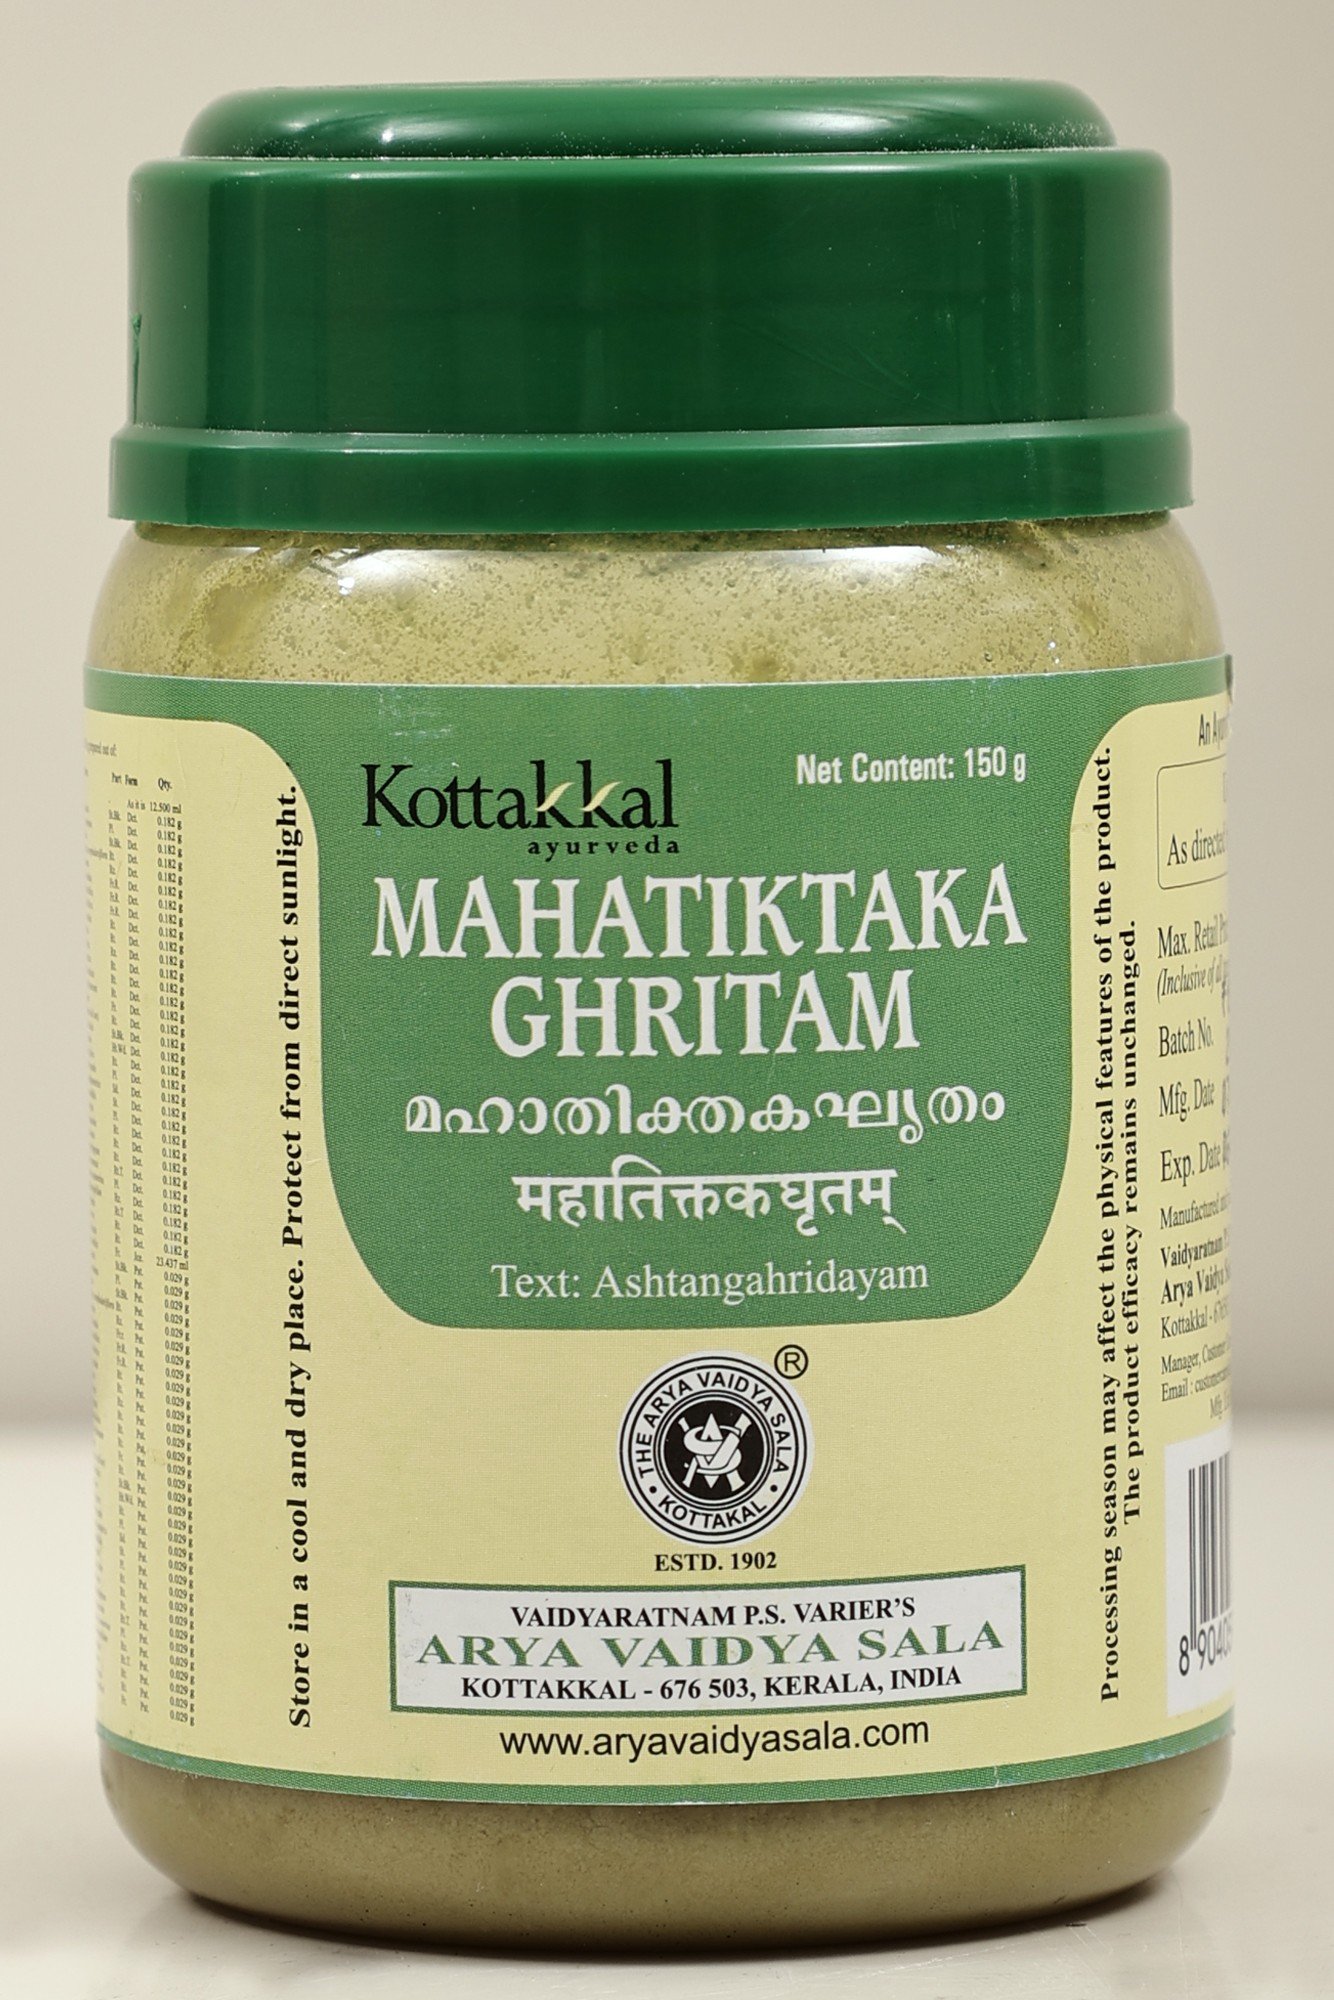 Mahatiktaka Ghritam - book cover